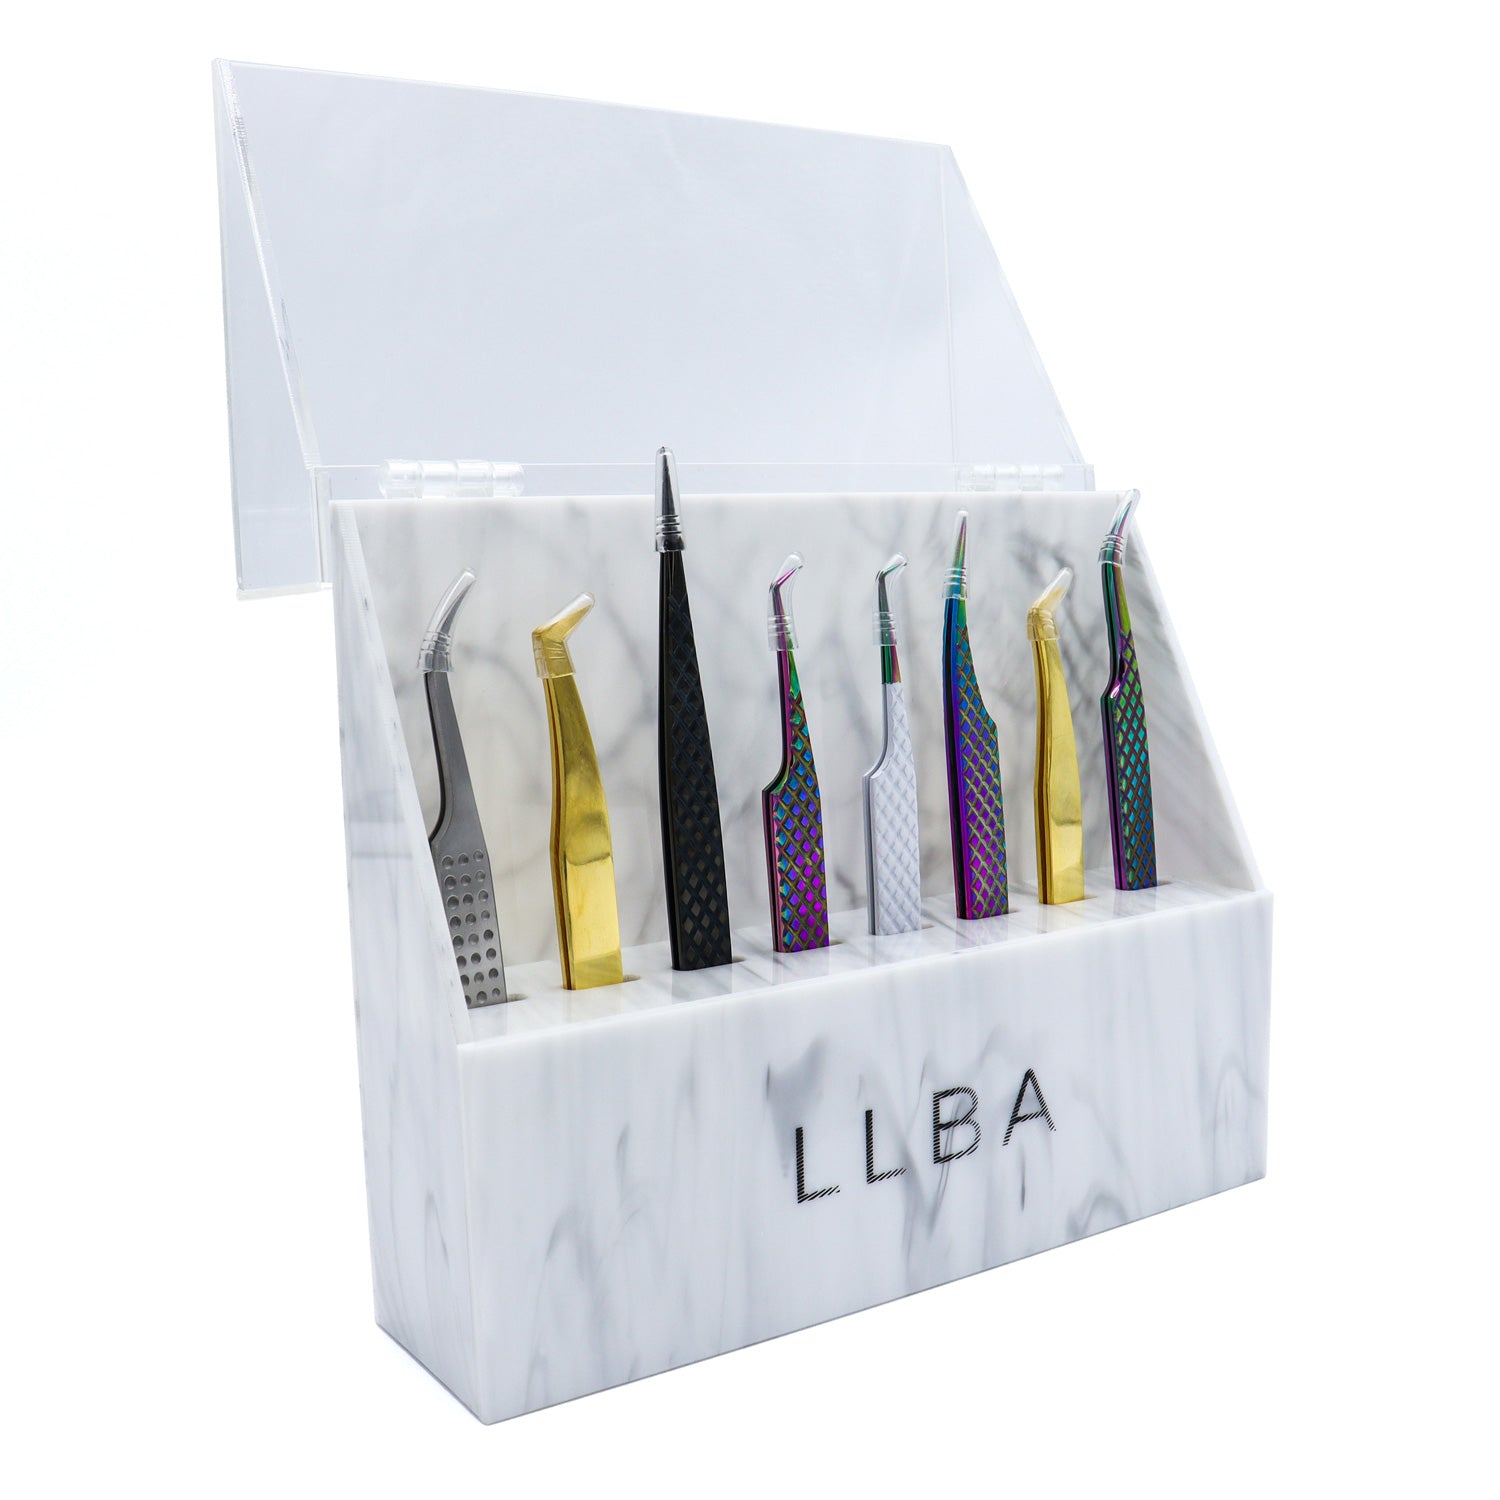 LLBA Professional Eyebrow Tweezer Set ( 3pcs)